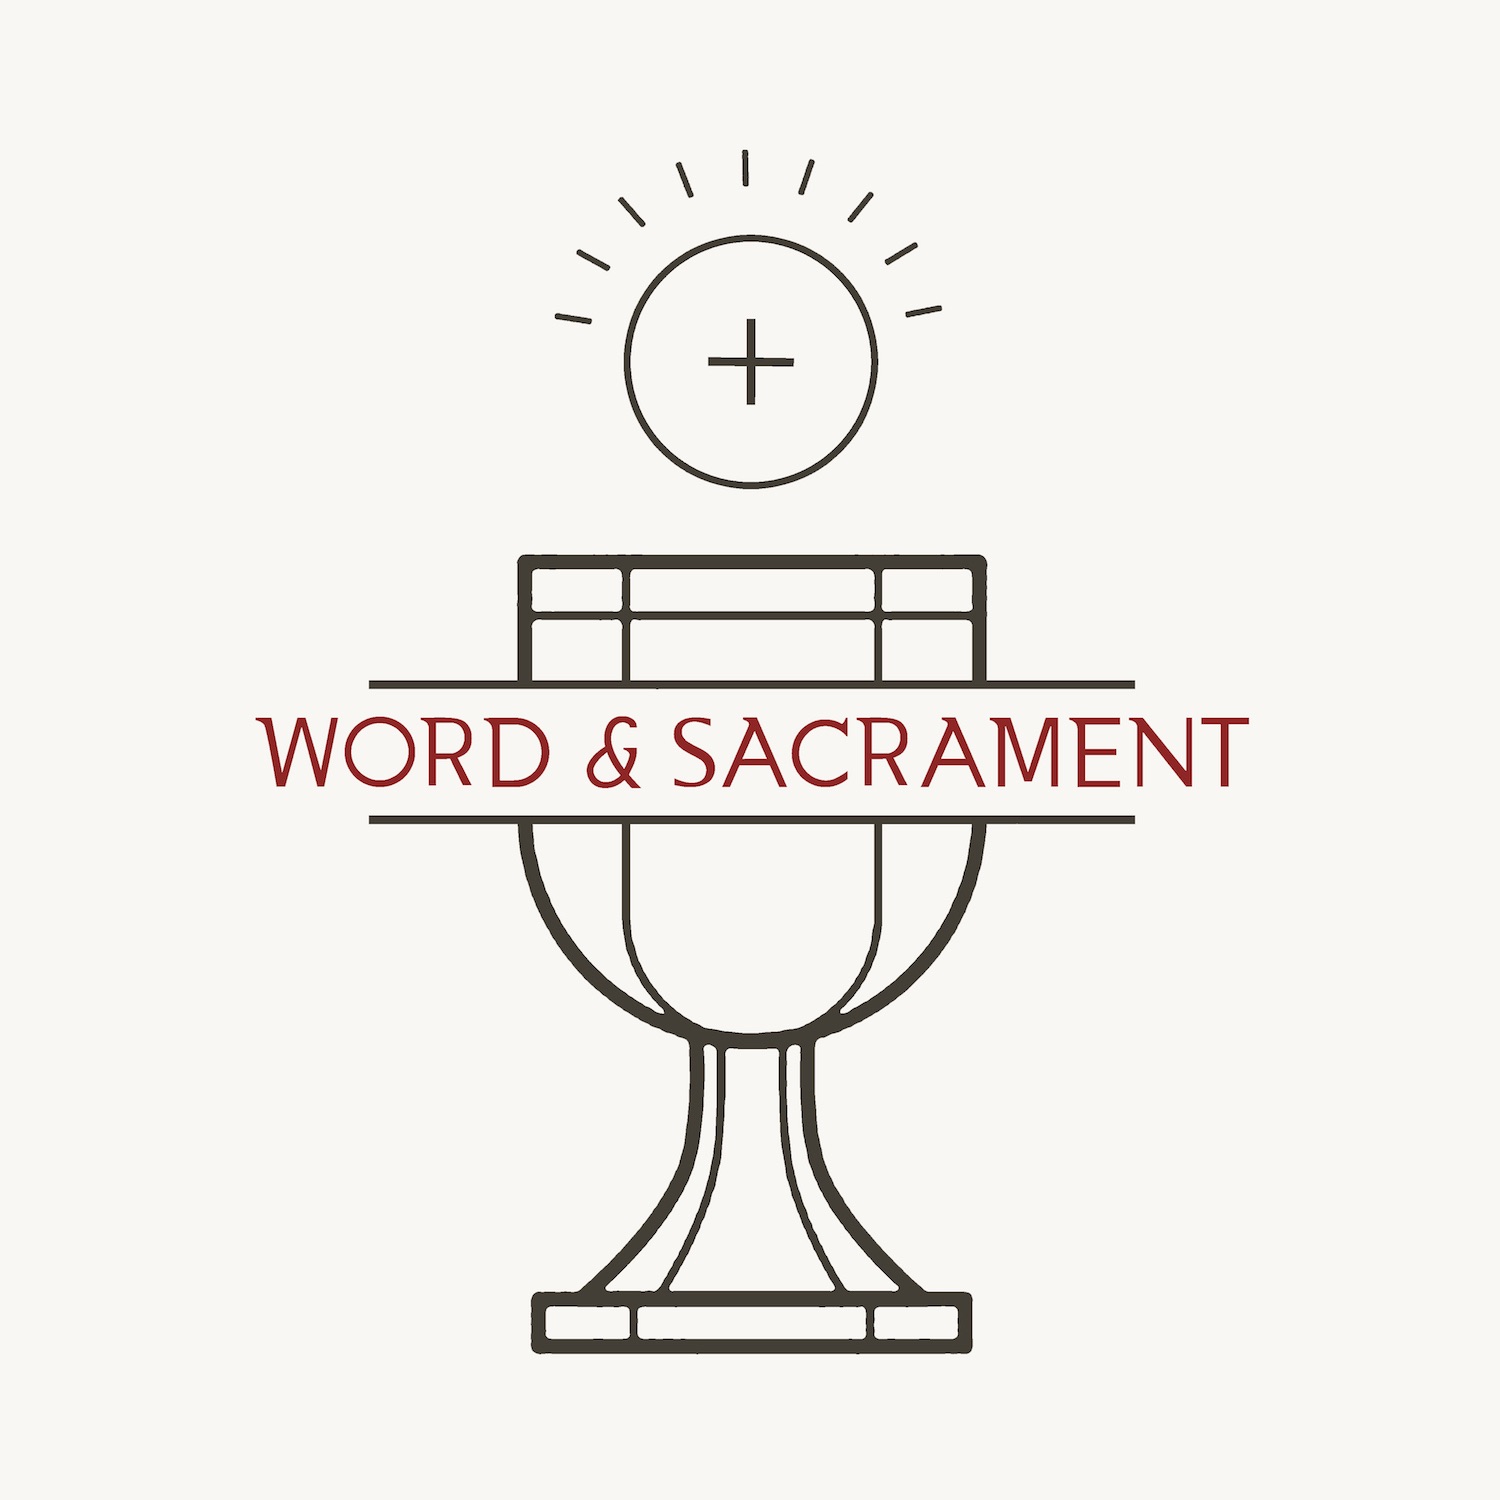 Word & Sacrament